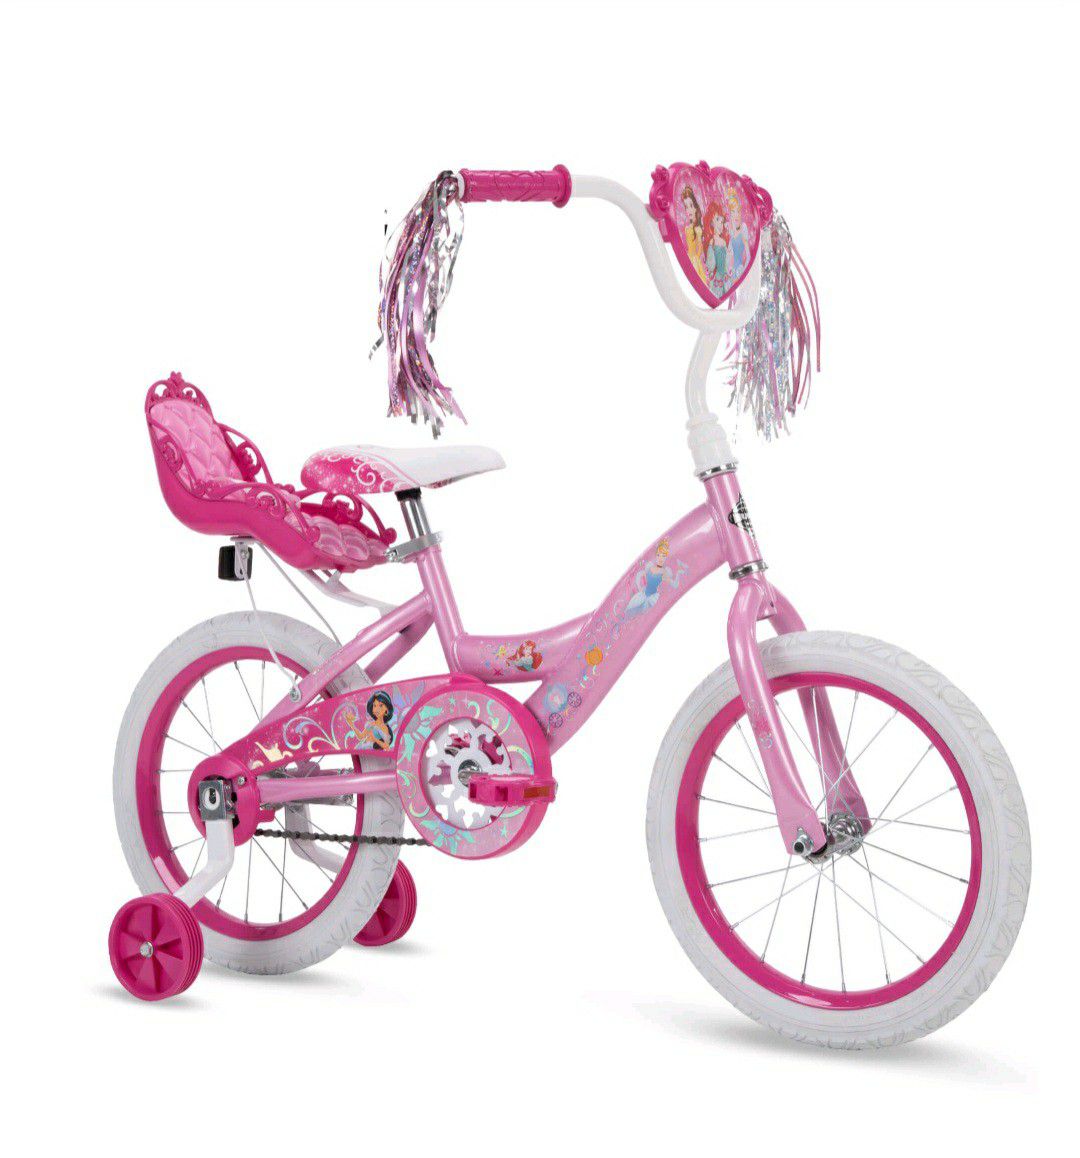 Disney Princess Girls 16-inch Bike by Huffy , Pink